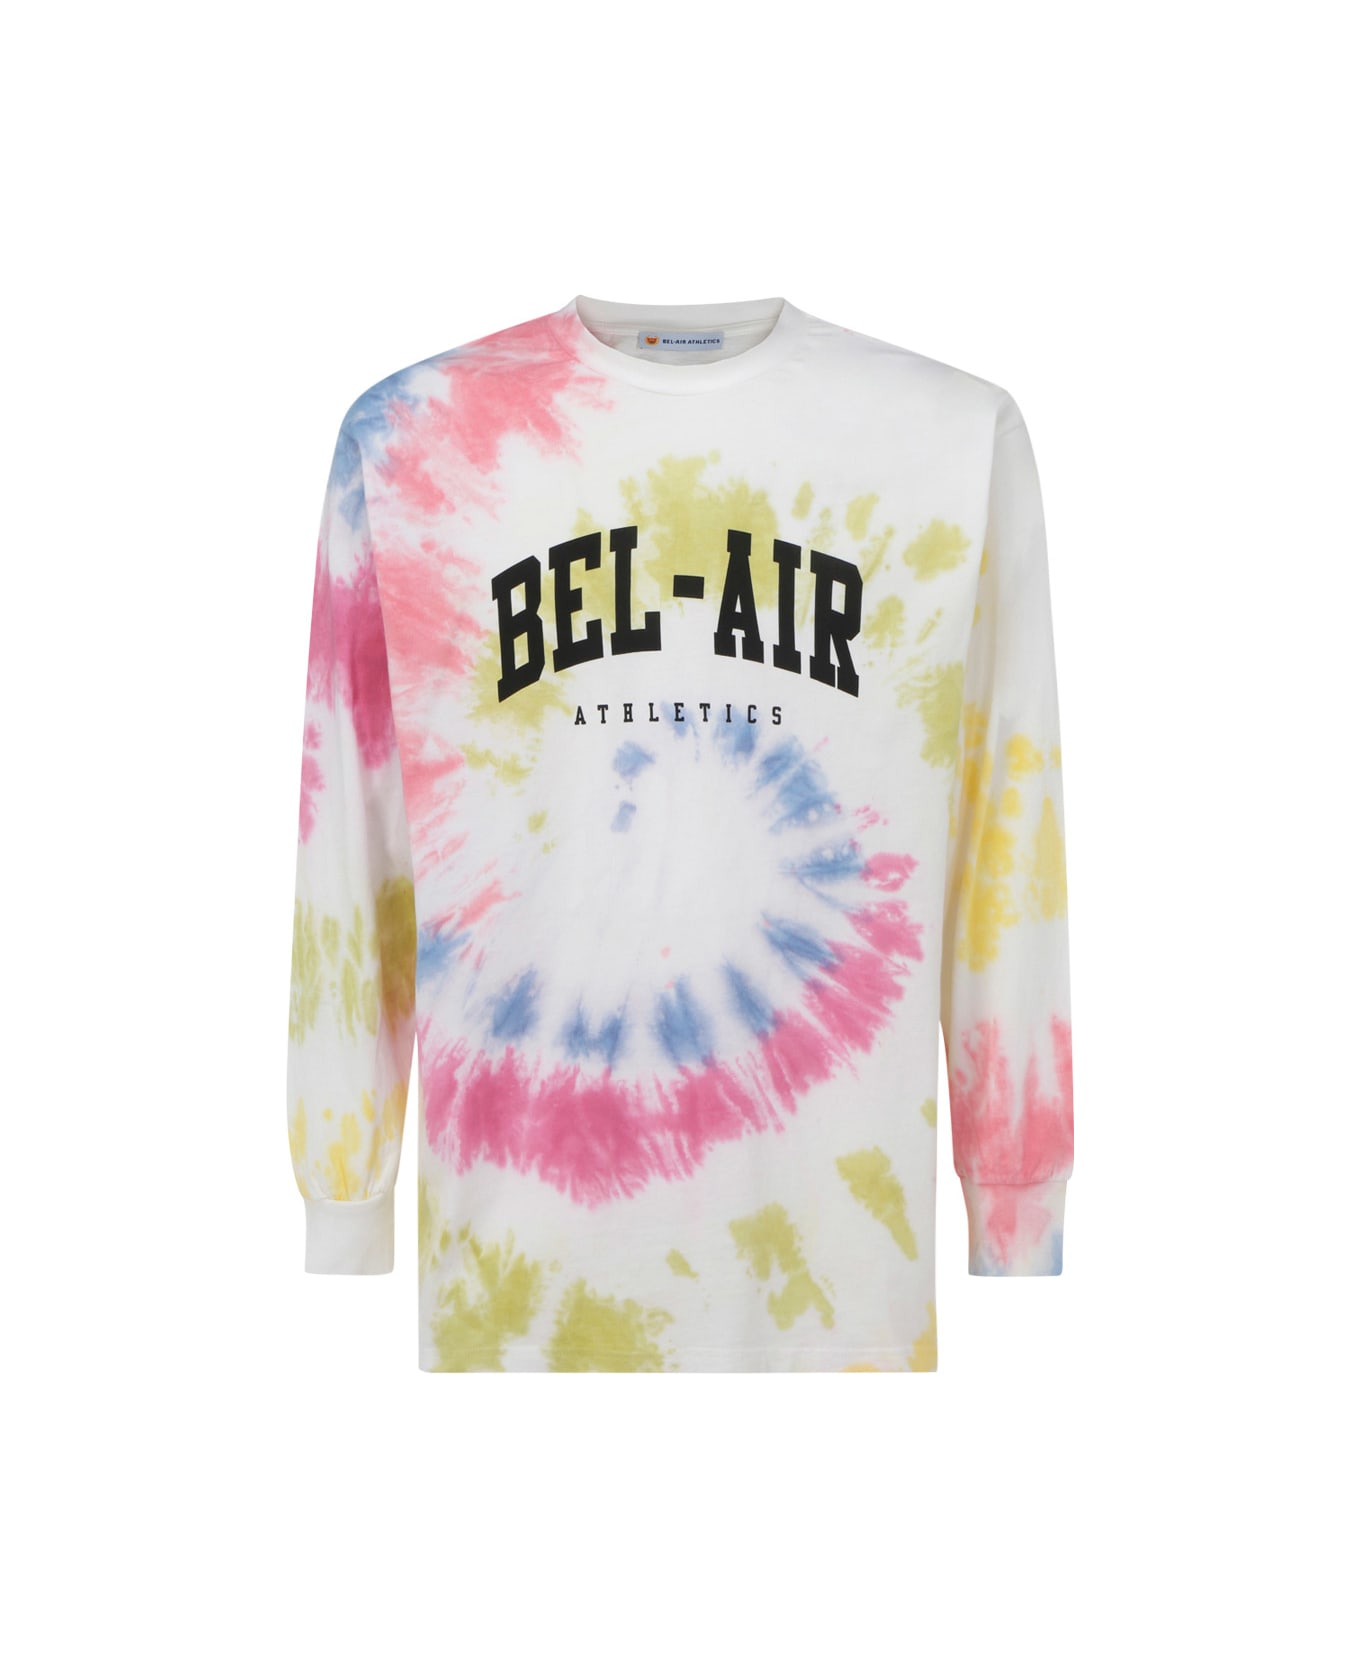 Bel-Air Athletics Long Sleeve T-shirt - Multicolor